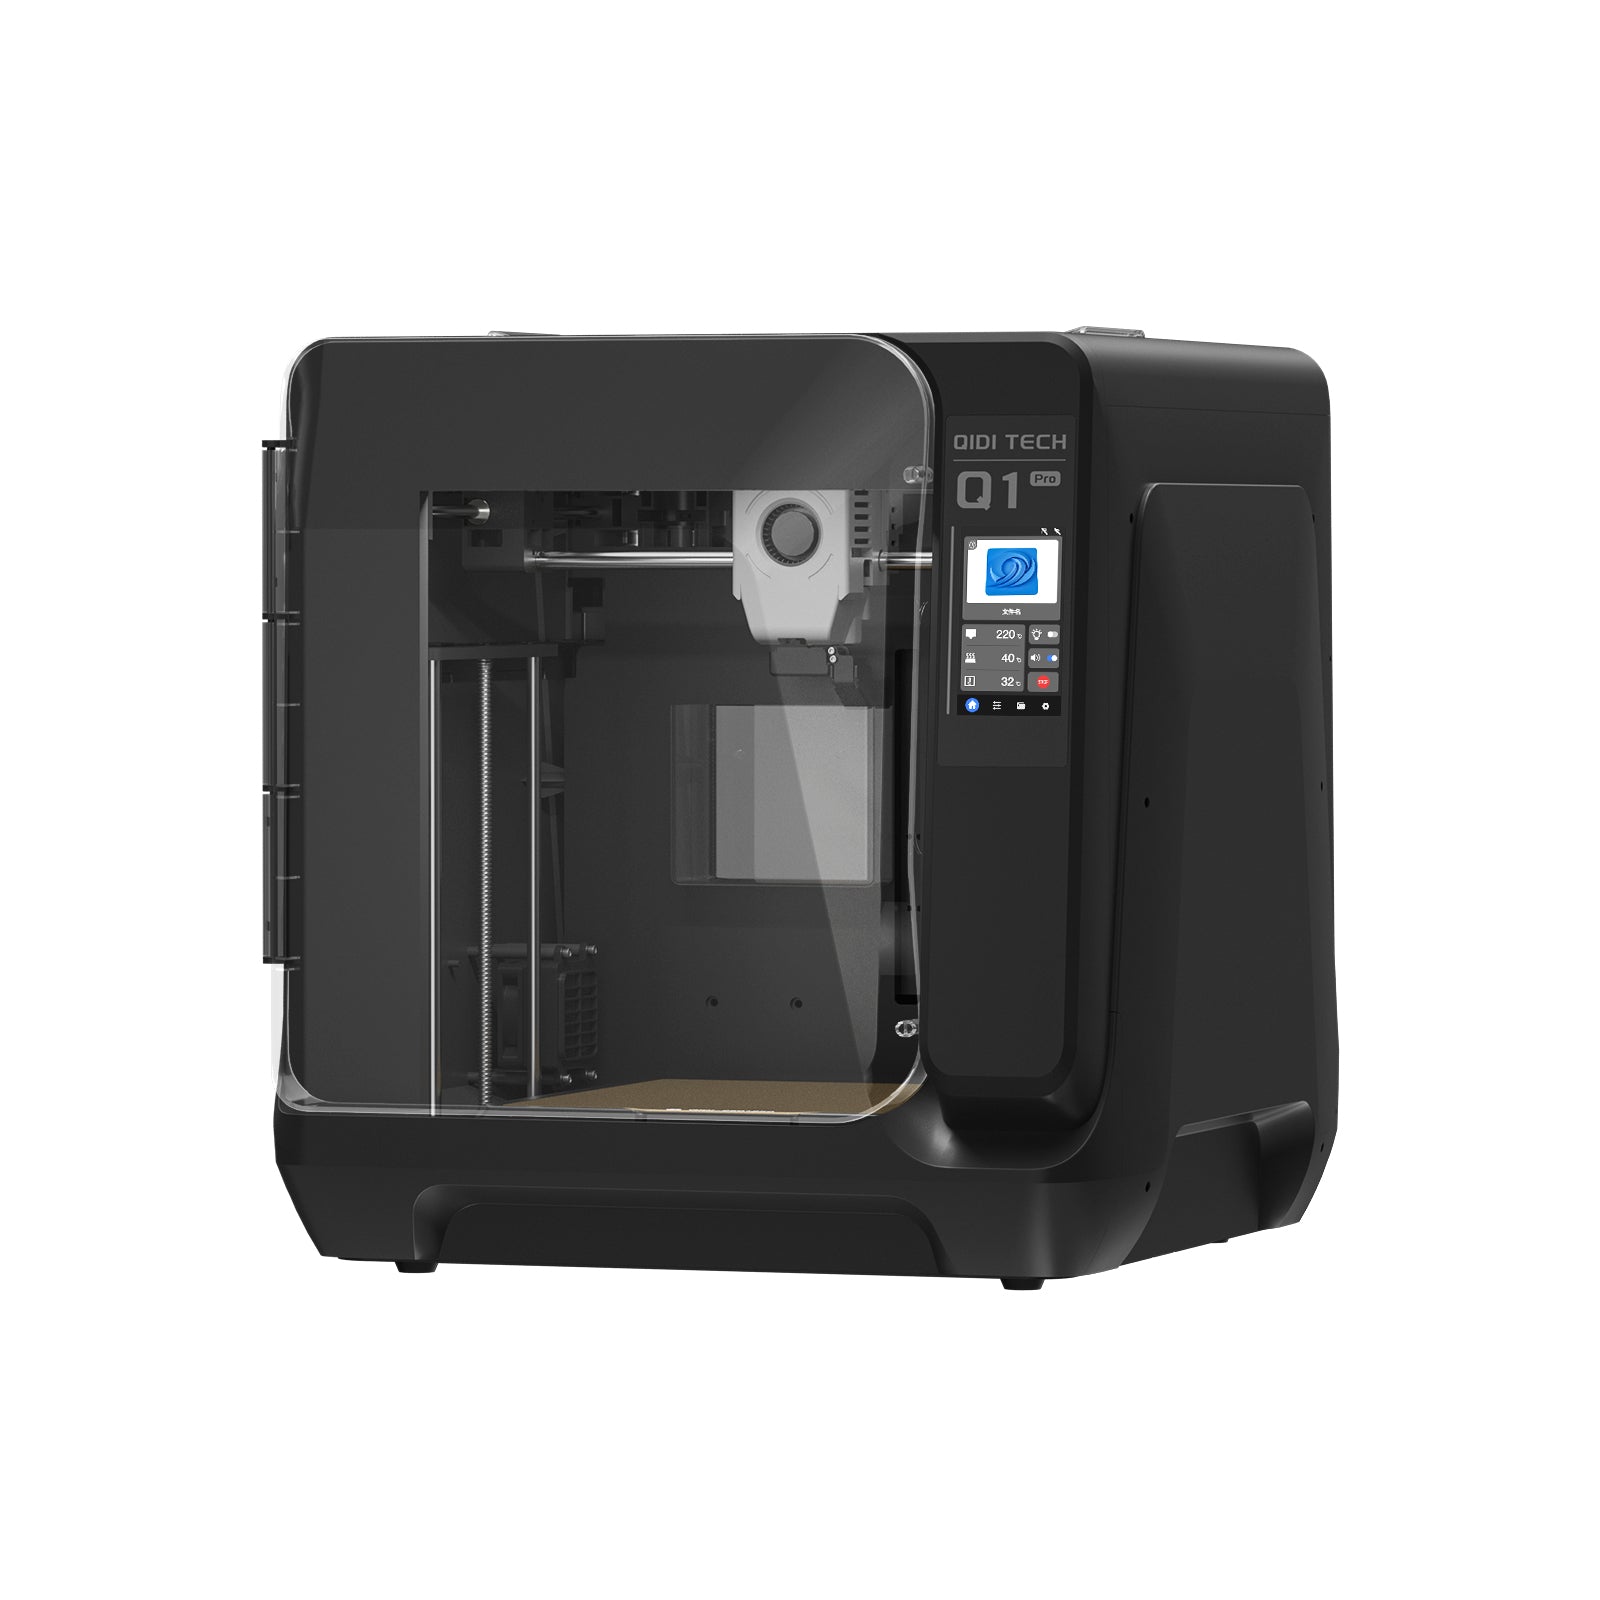 QIDI TECH Q1 PRO 3D Printer